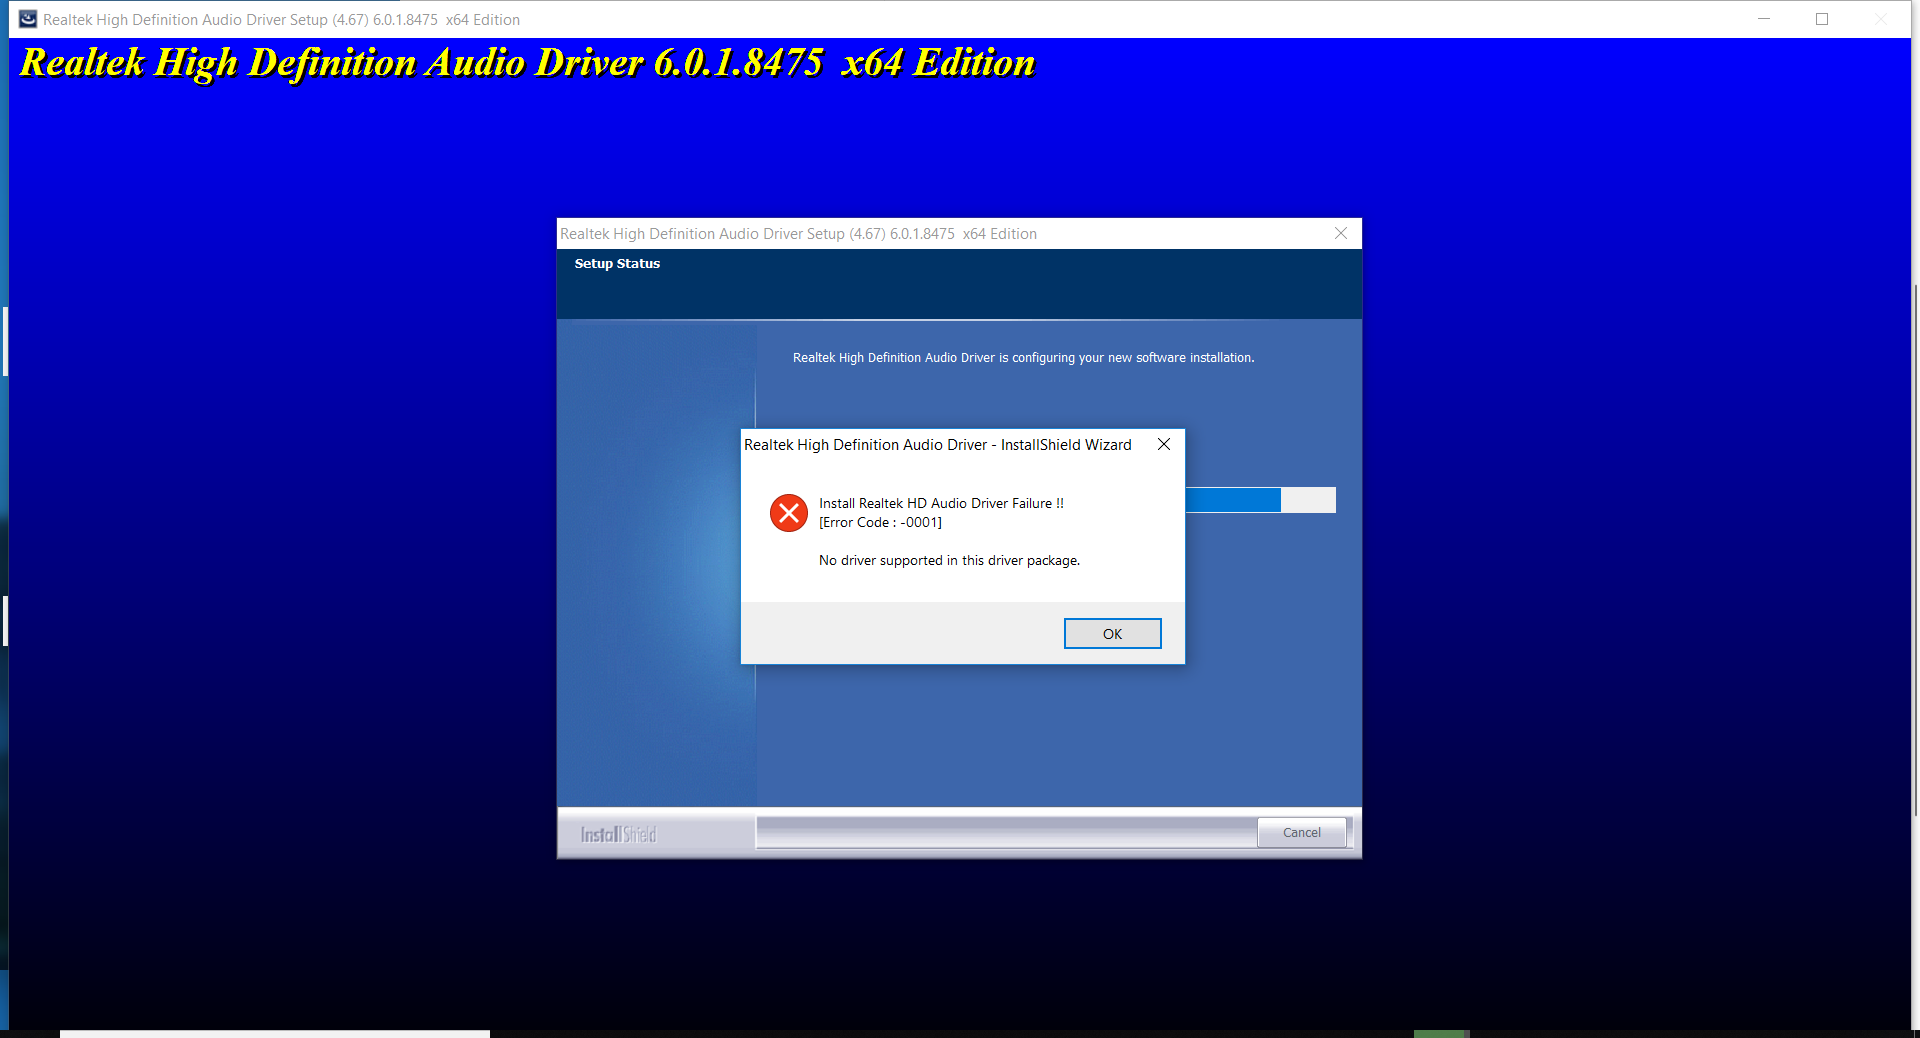 Realtek High-Definition (HD) Audio Driver for Windows 10 v18... - HP  Support Community - 6860014